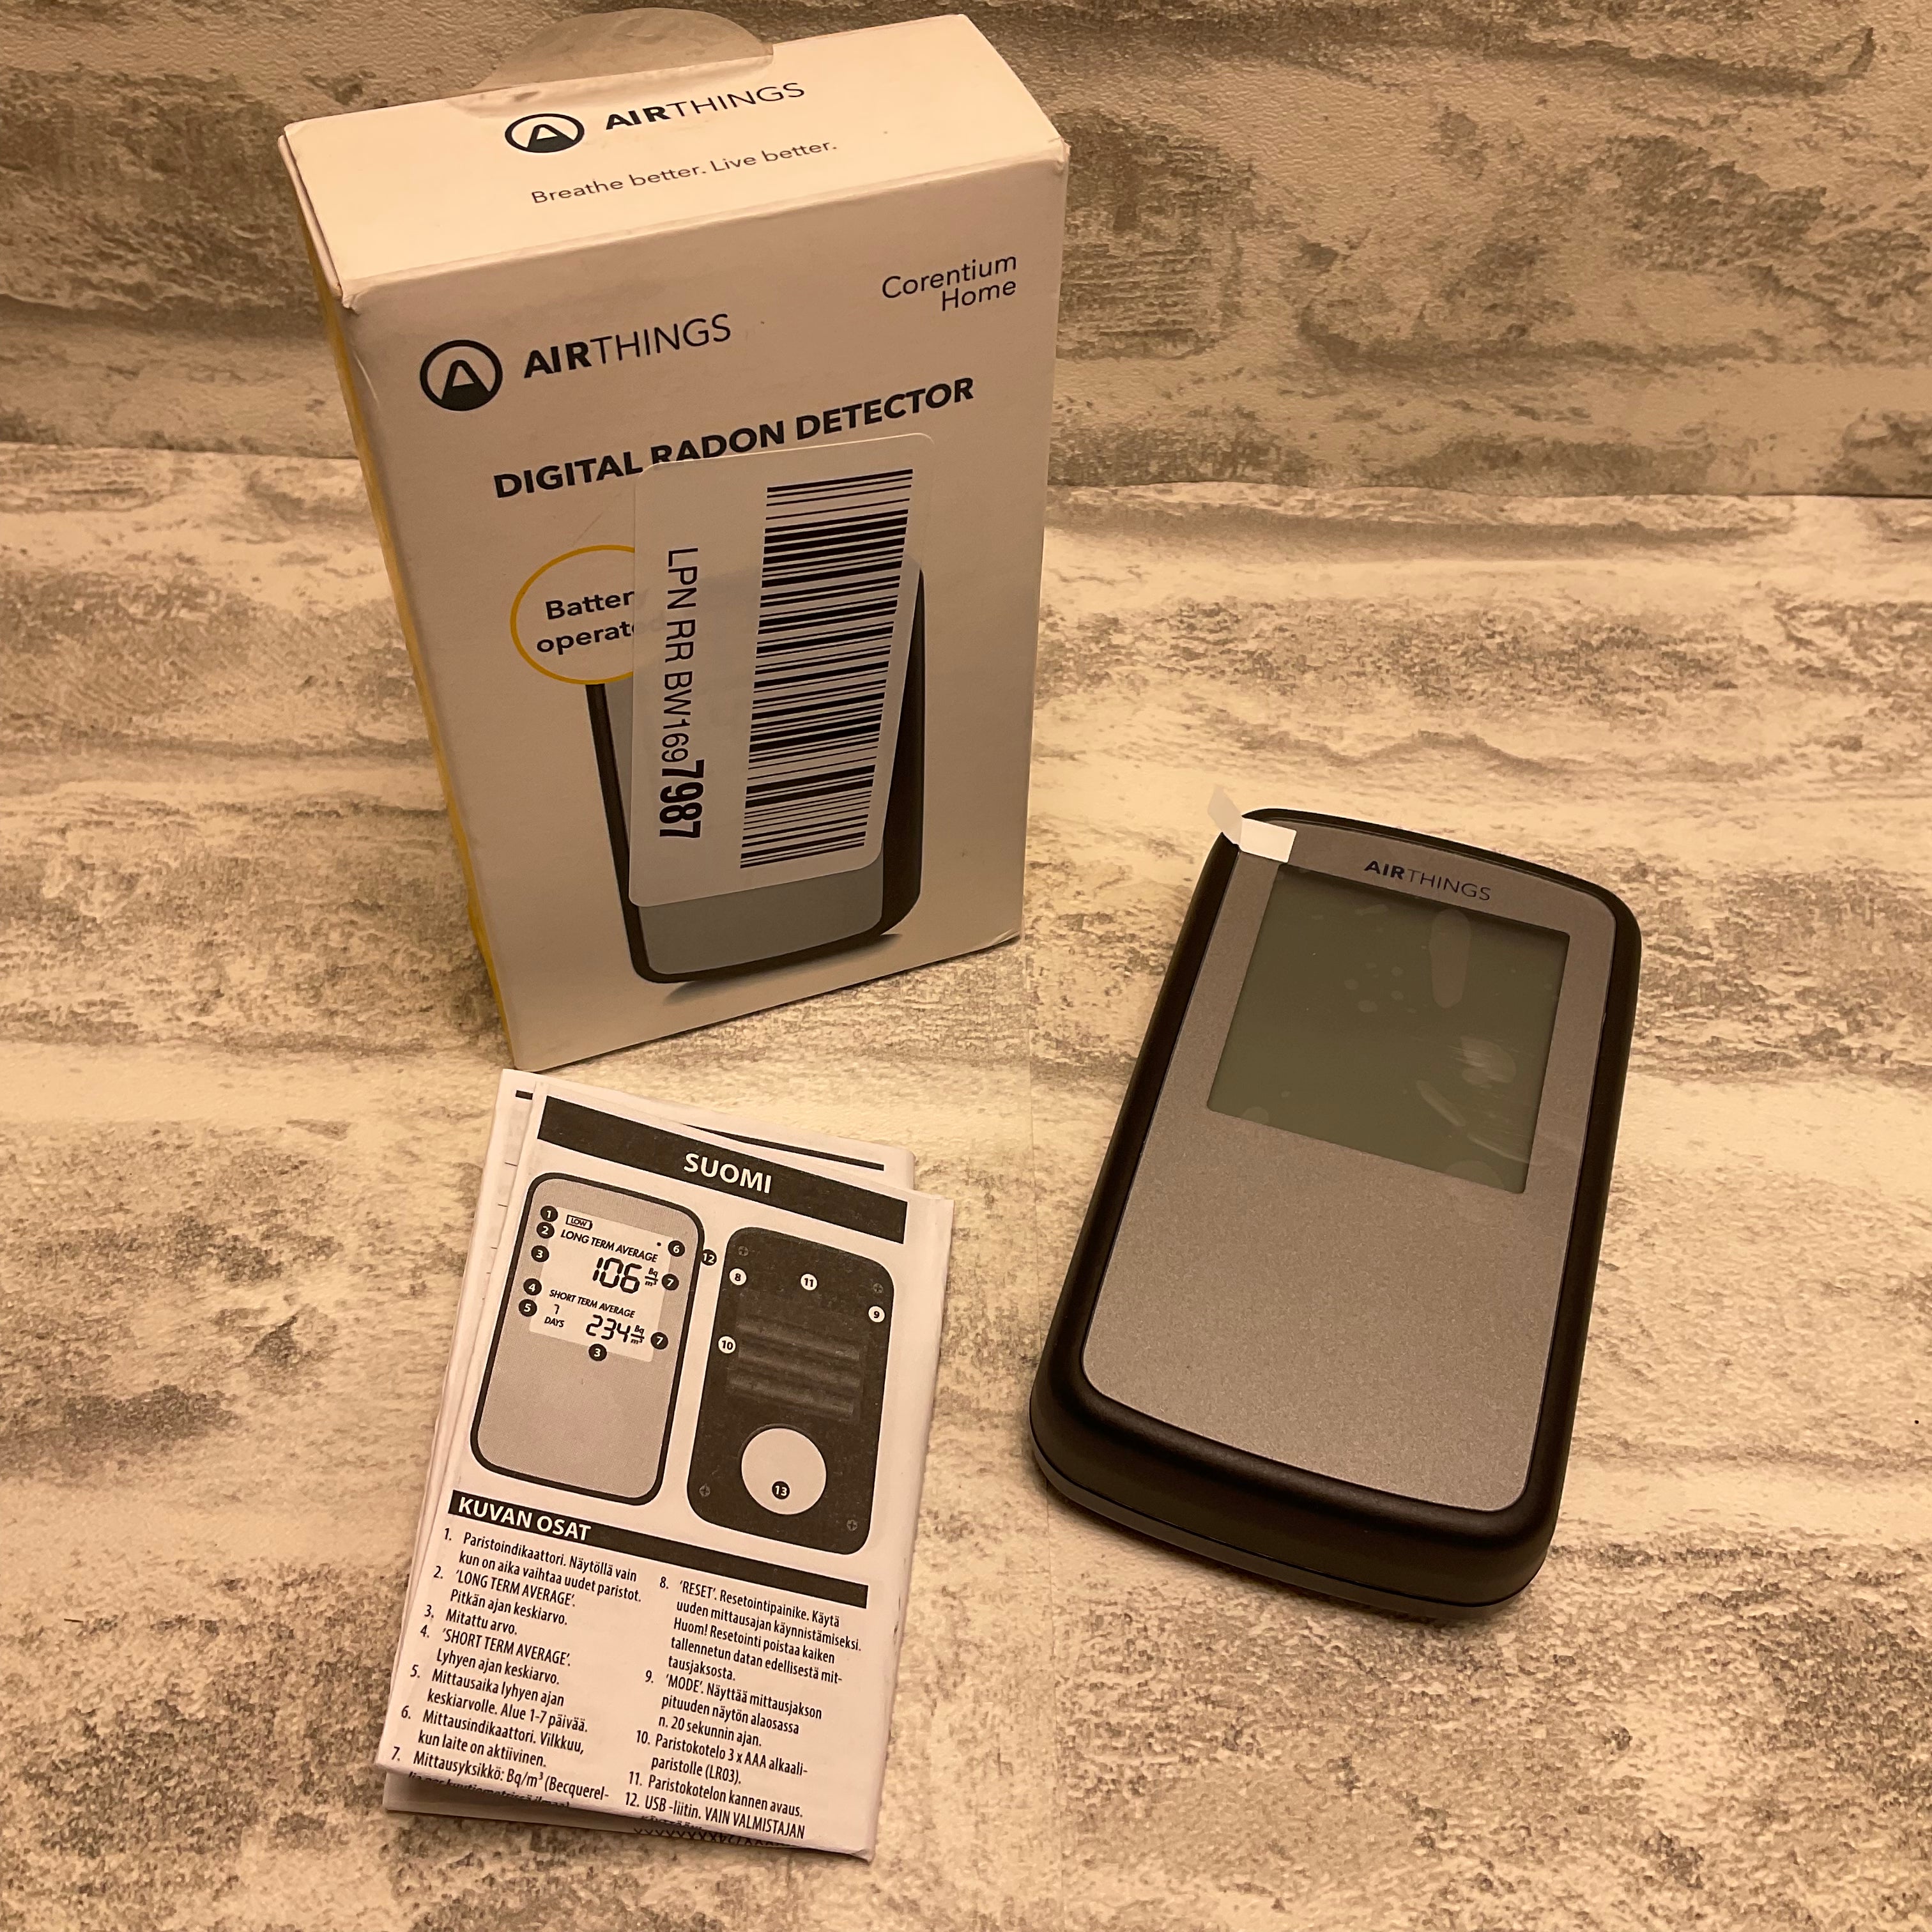 Airthings Corentium Home Radon Detector 223 Portable (7531639046382)